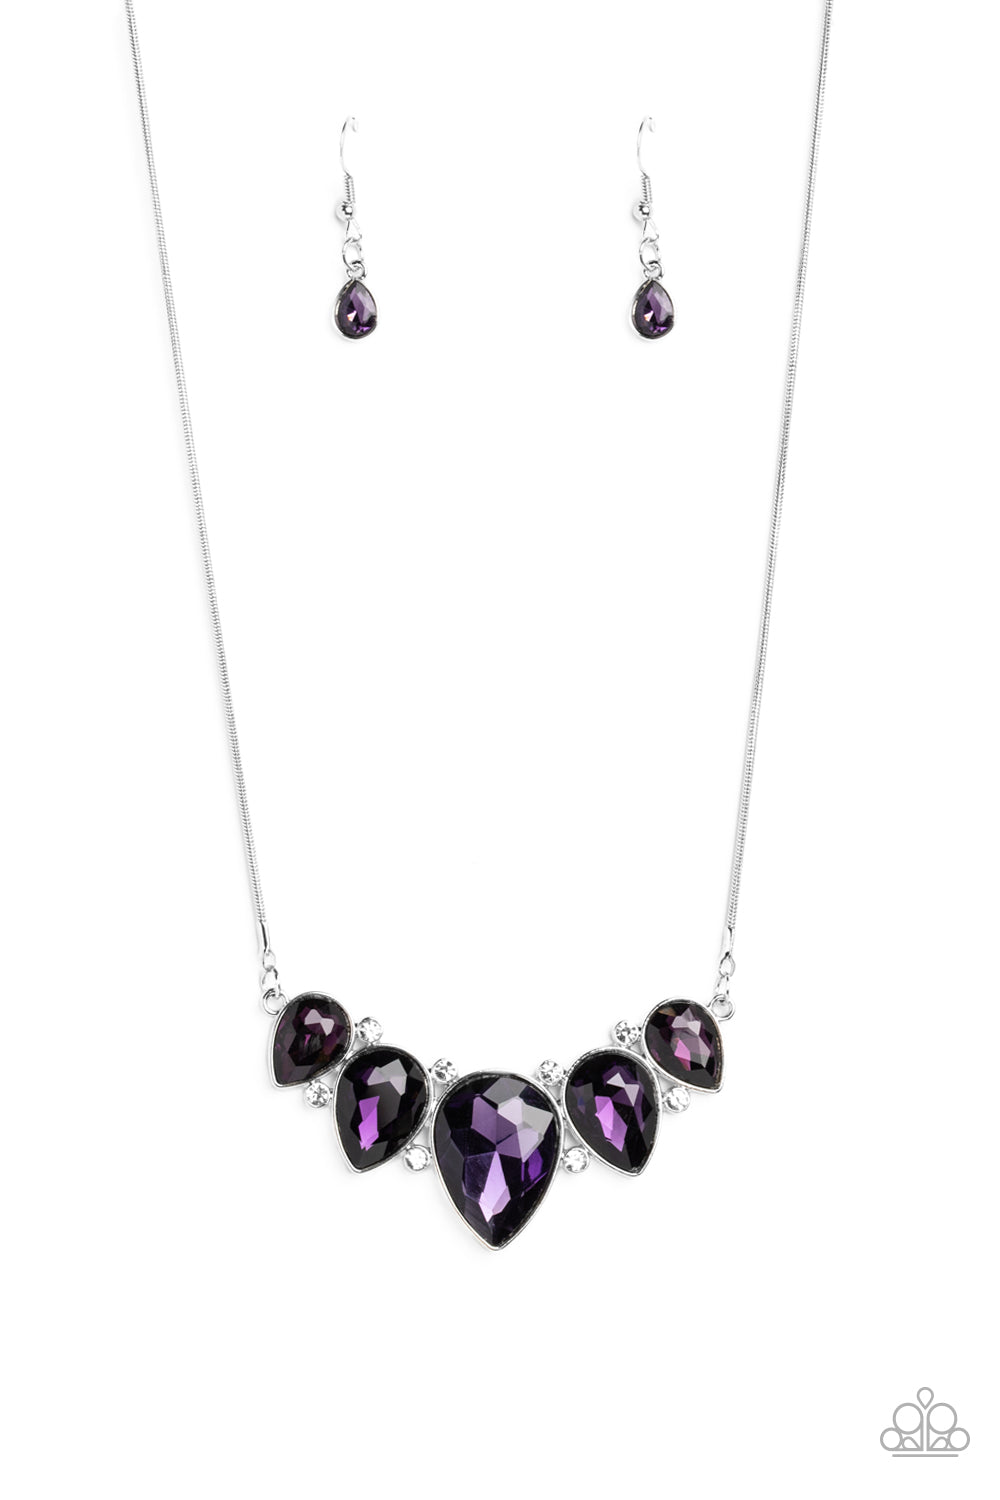 Regally Refined Necklace (Multi, Purple)